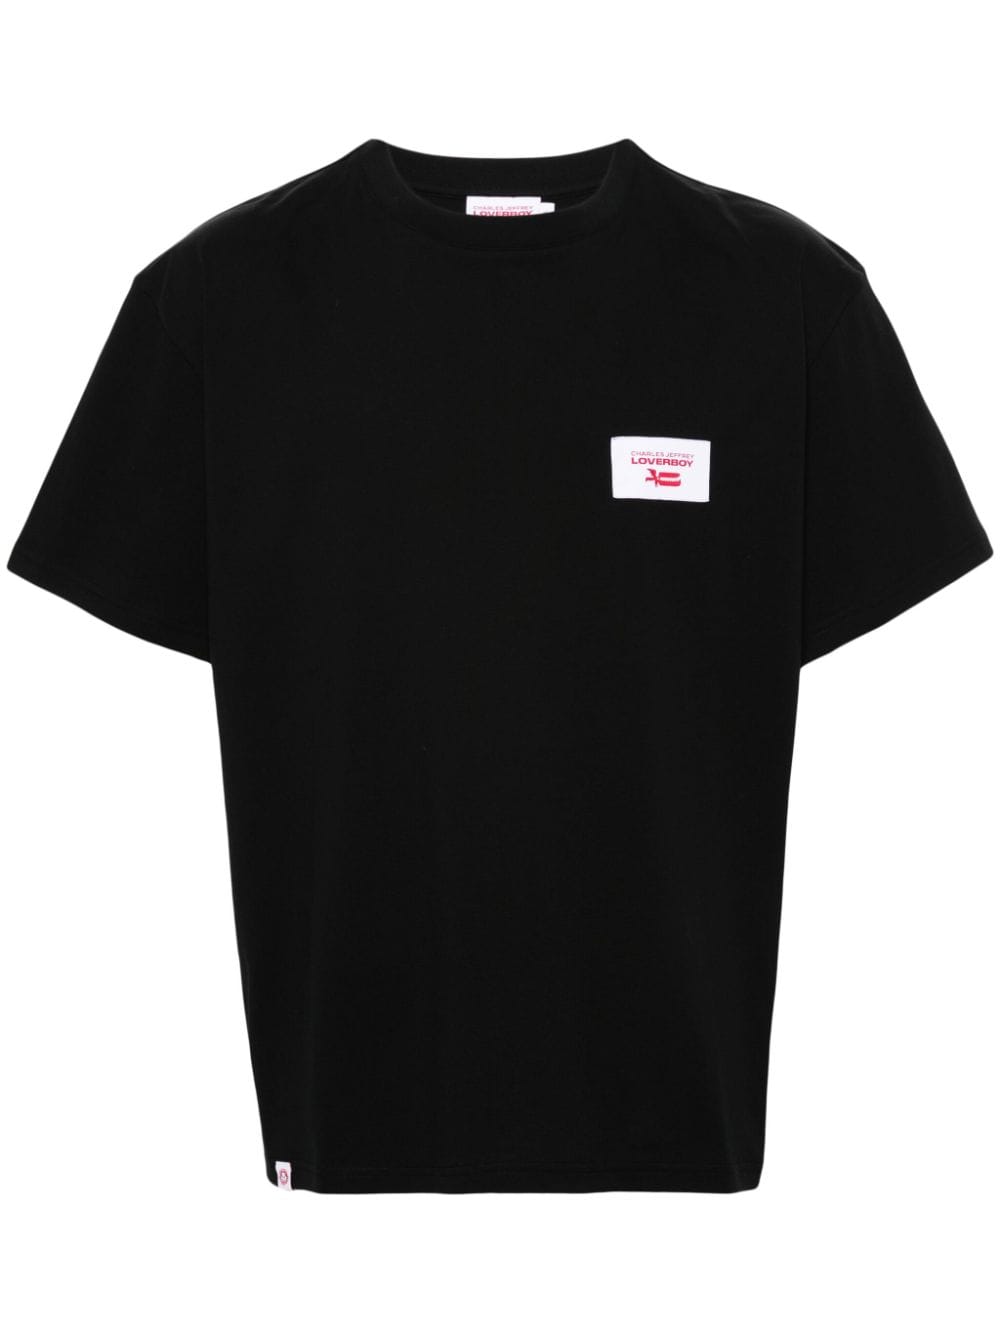 Charles Jeffrey Loverboy Label cotton T-shirt - Black von Charles Jeffrey Loverboy